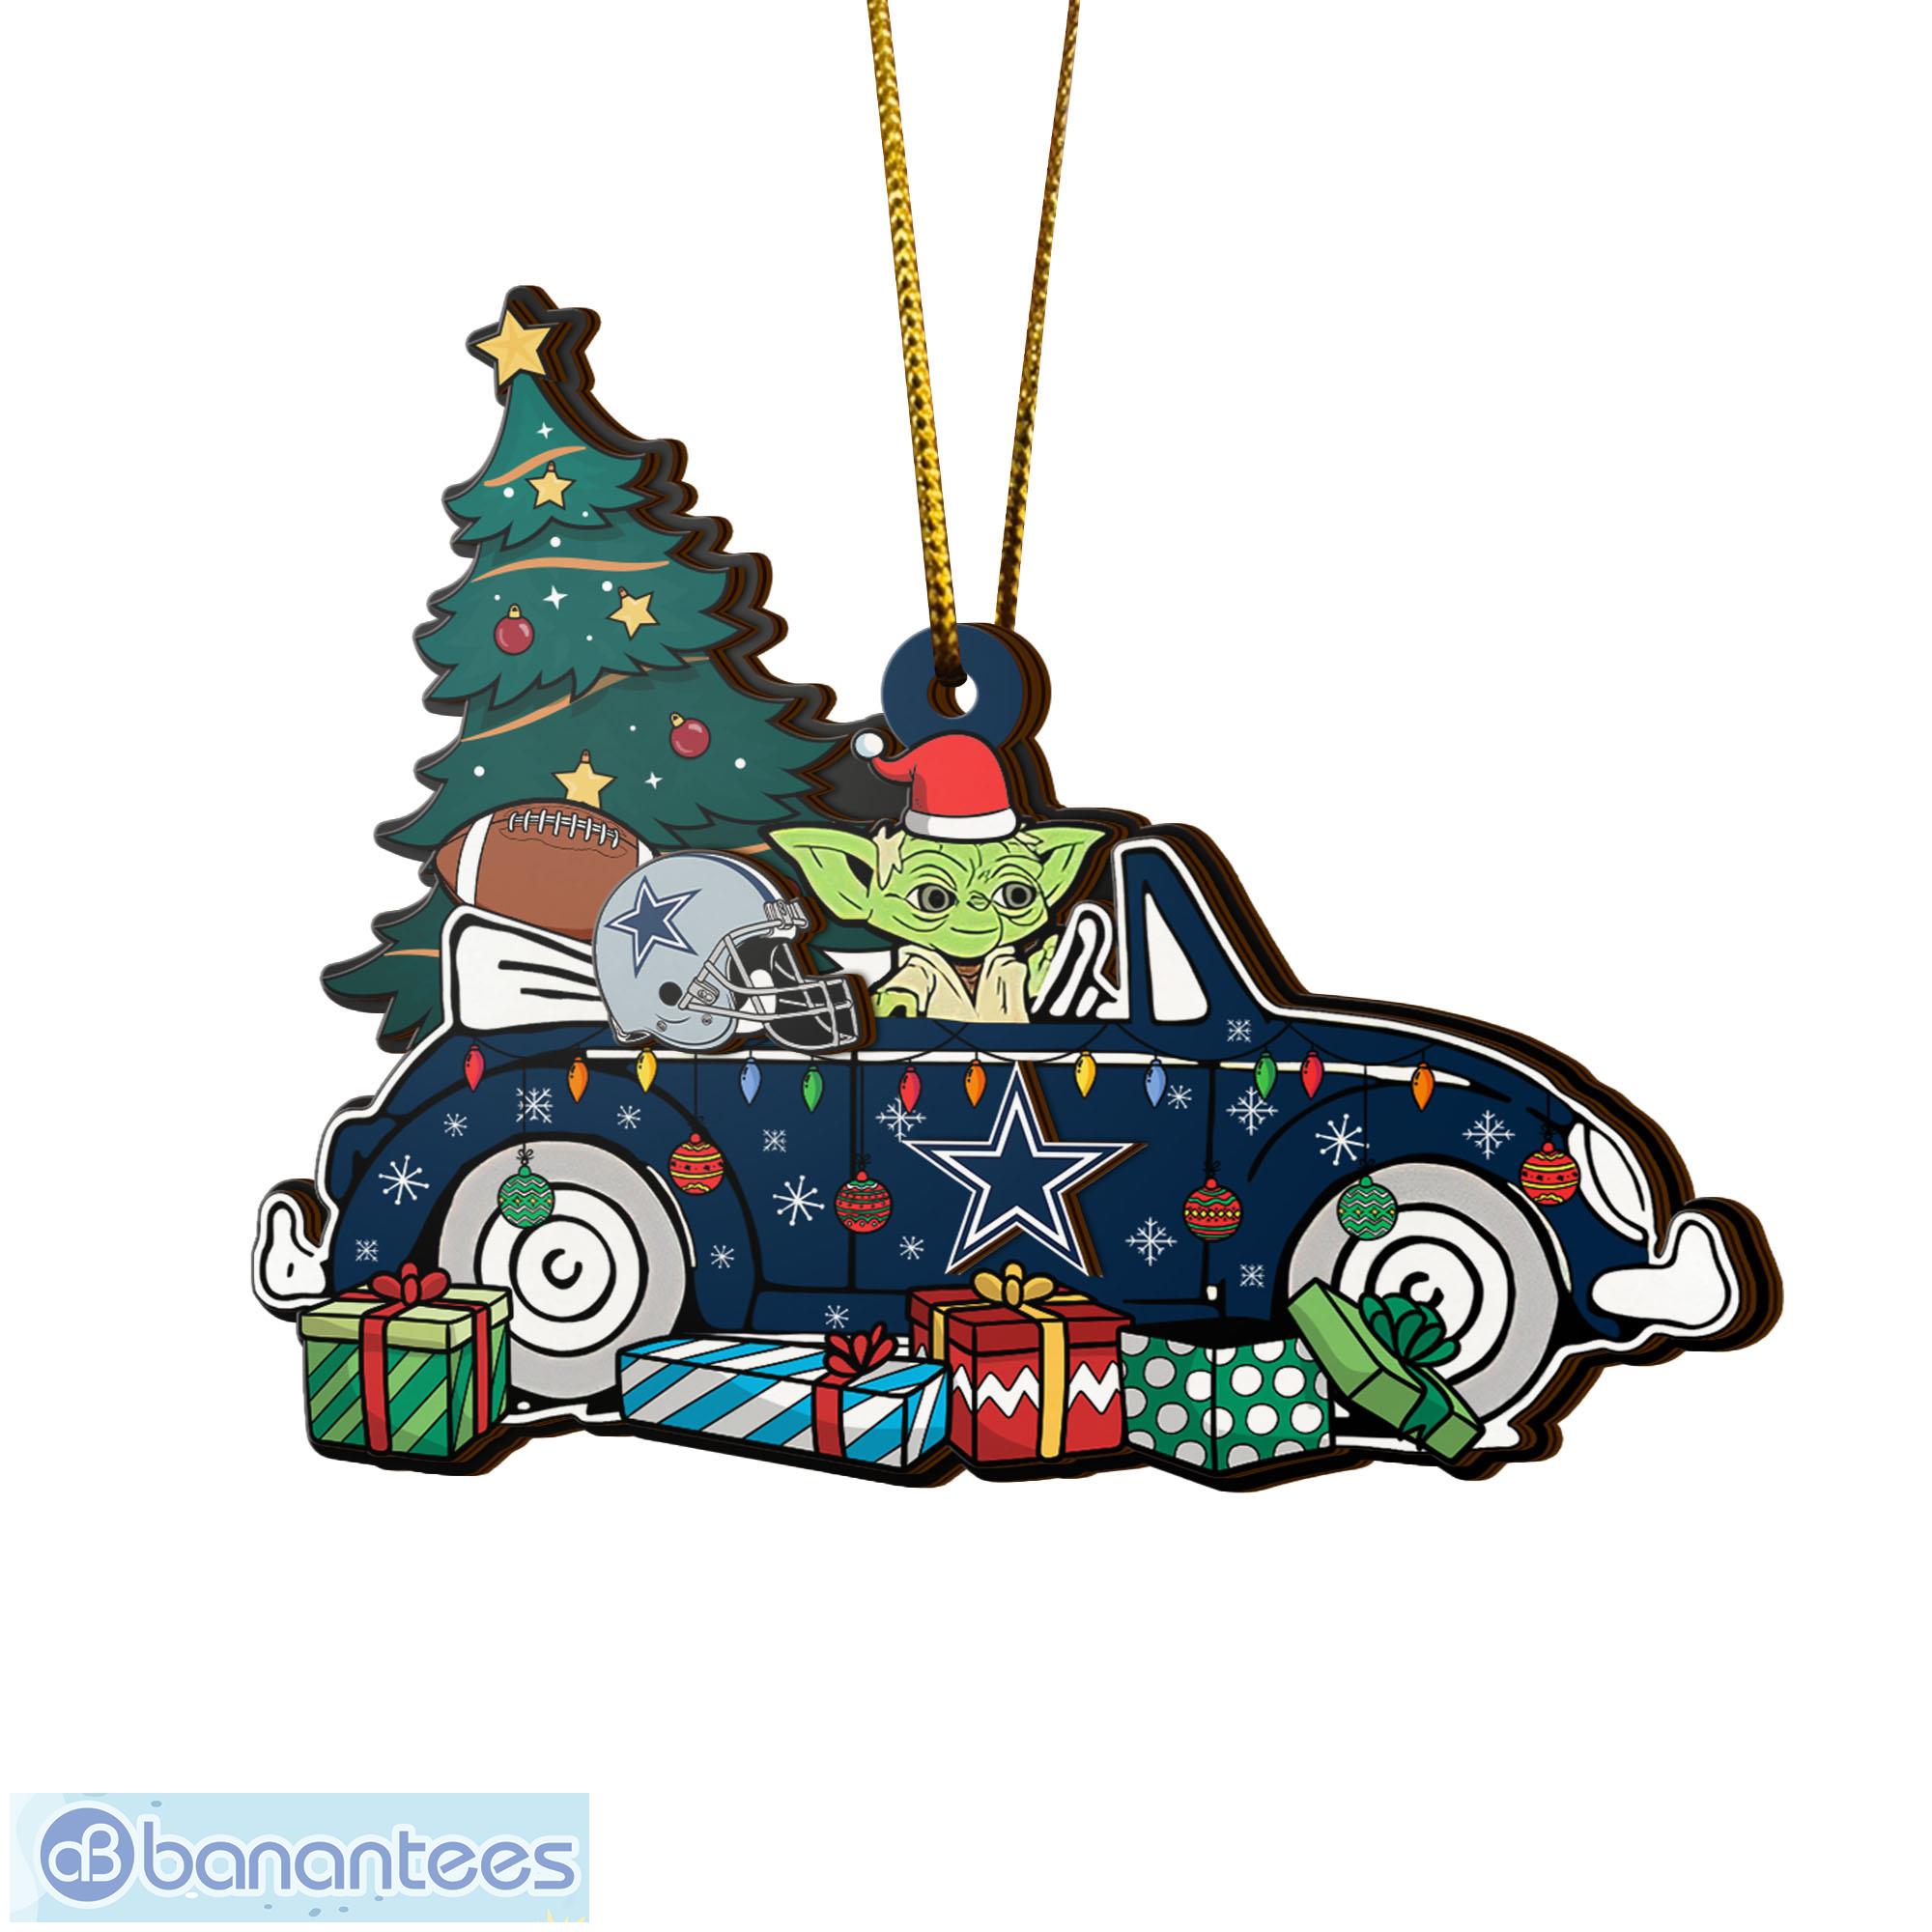 Dallas Cowboys-Baby Yoda Christmas Tree Ornament